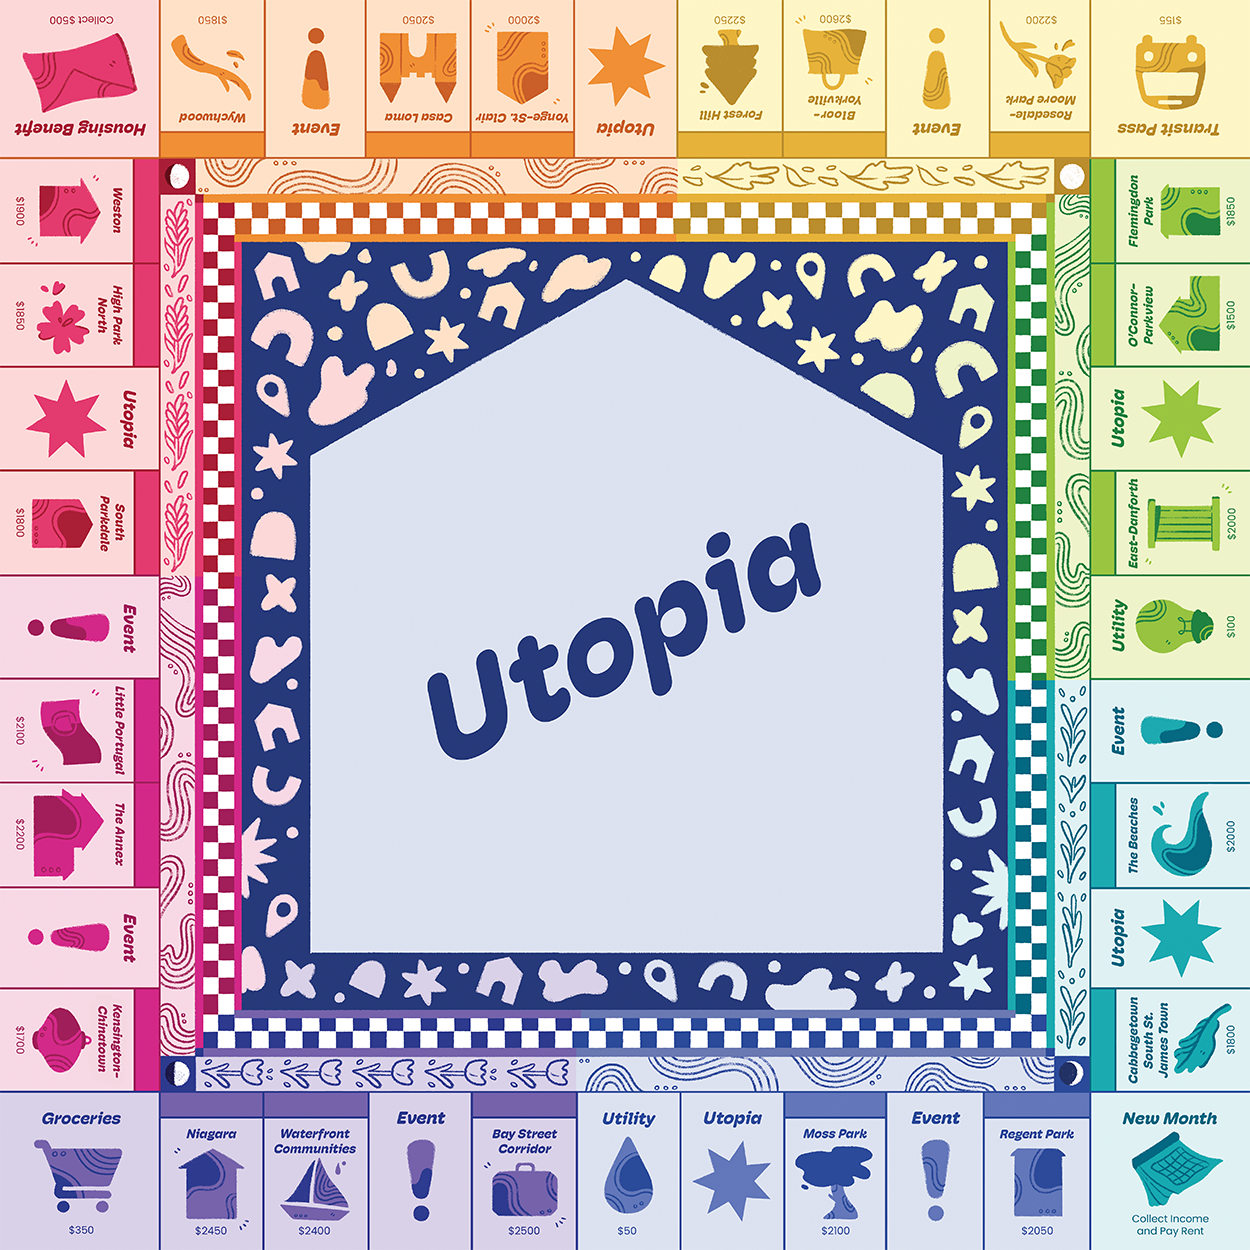 Utopia Board Illustration